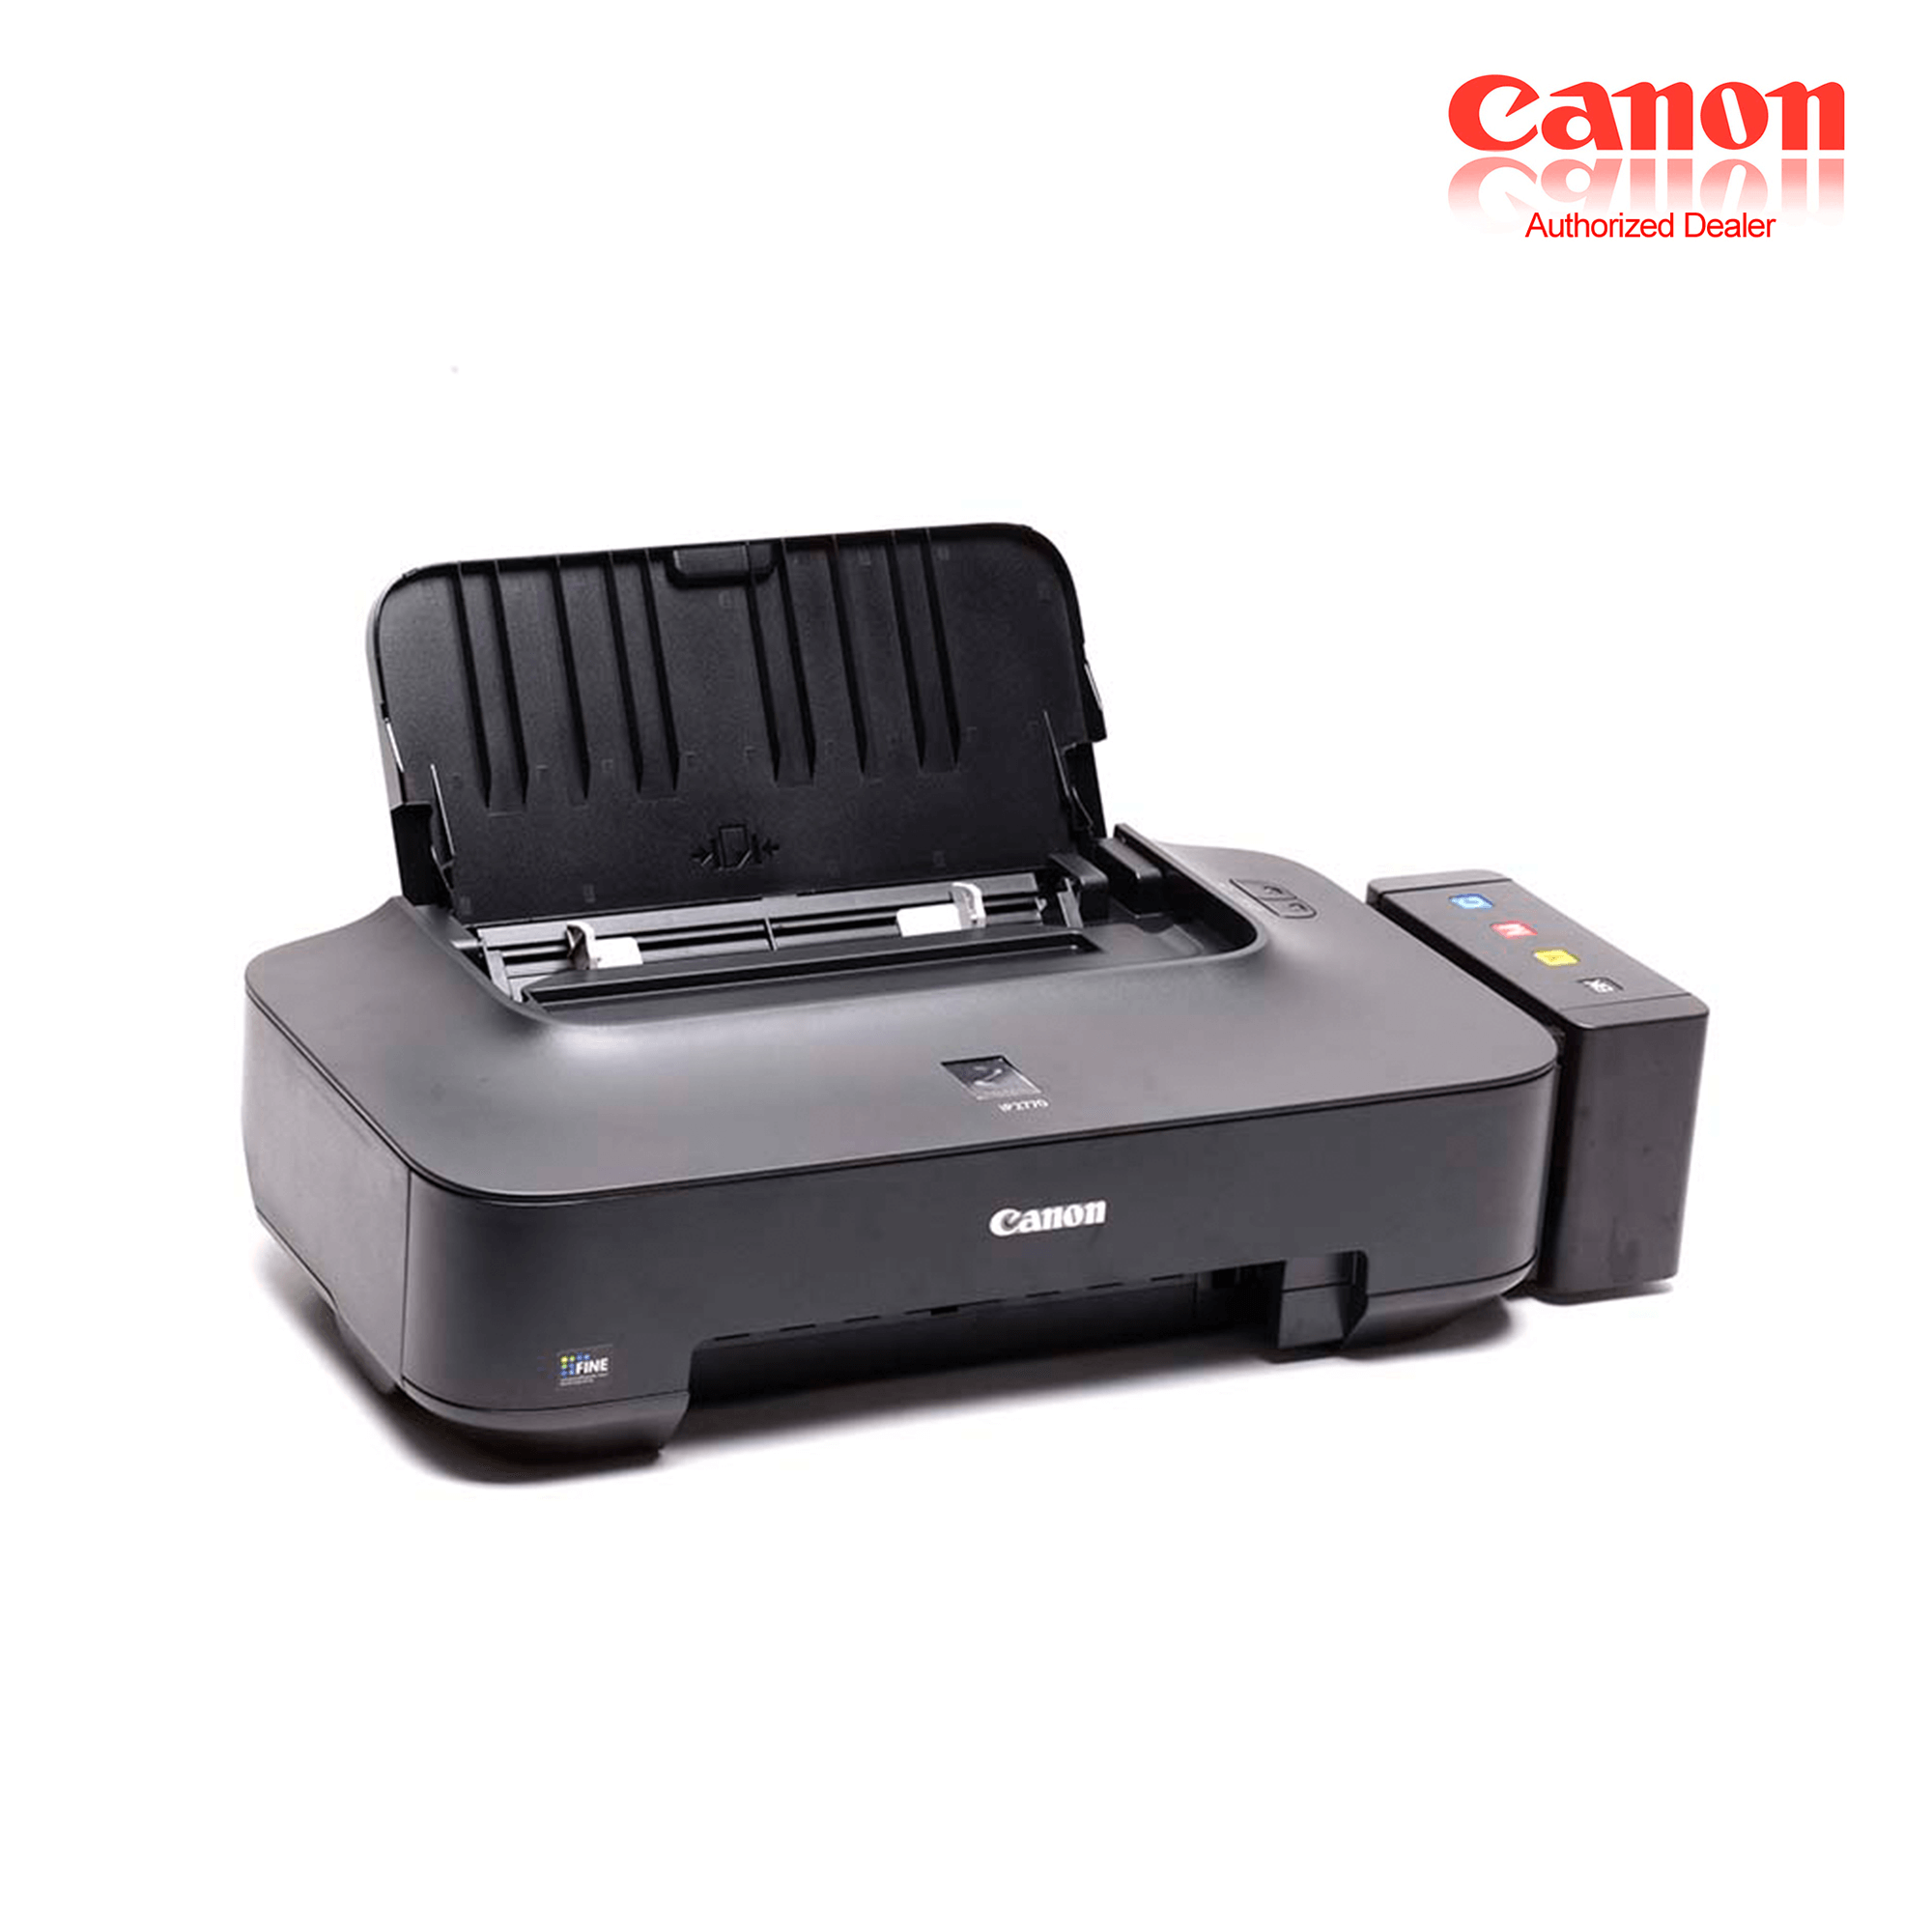 Canon Pixma IP2770 Printer Inktank Continous Ink System CISS and Elite Canon Premium Dye Ink